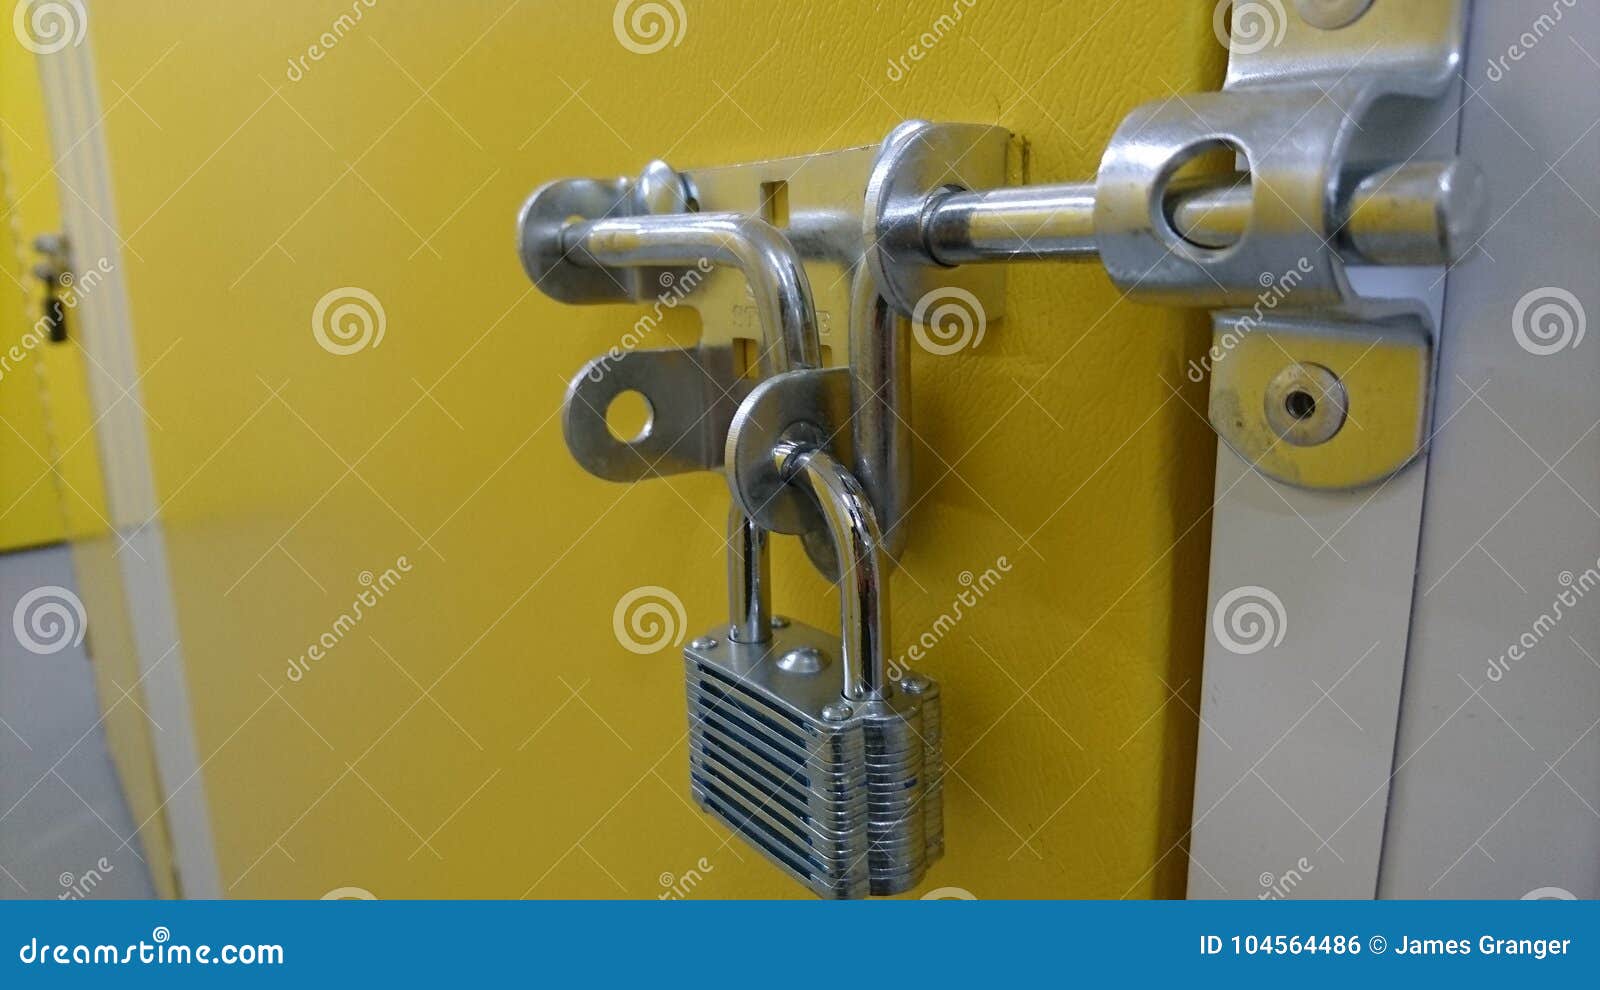 A Close Up Of An Aluminium Padlock And Door Bolt On A Storage Unit